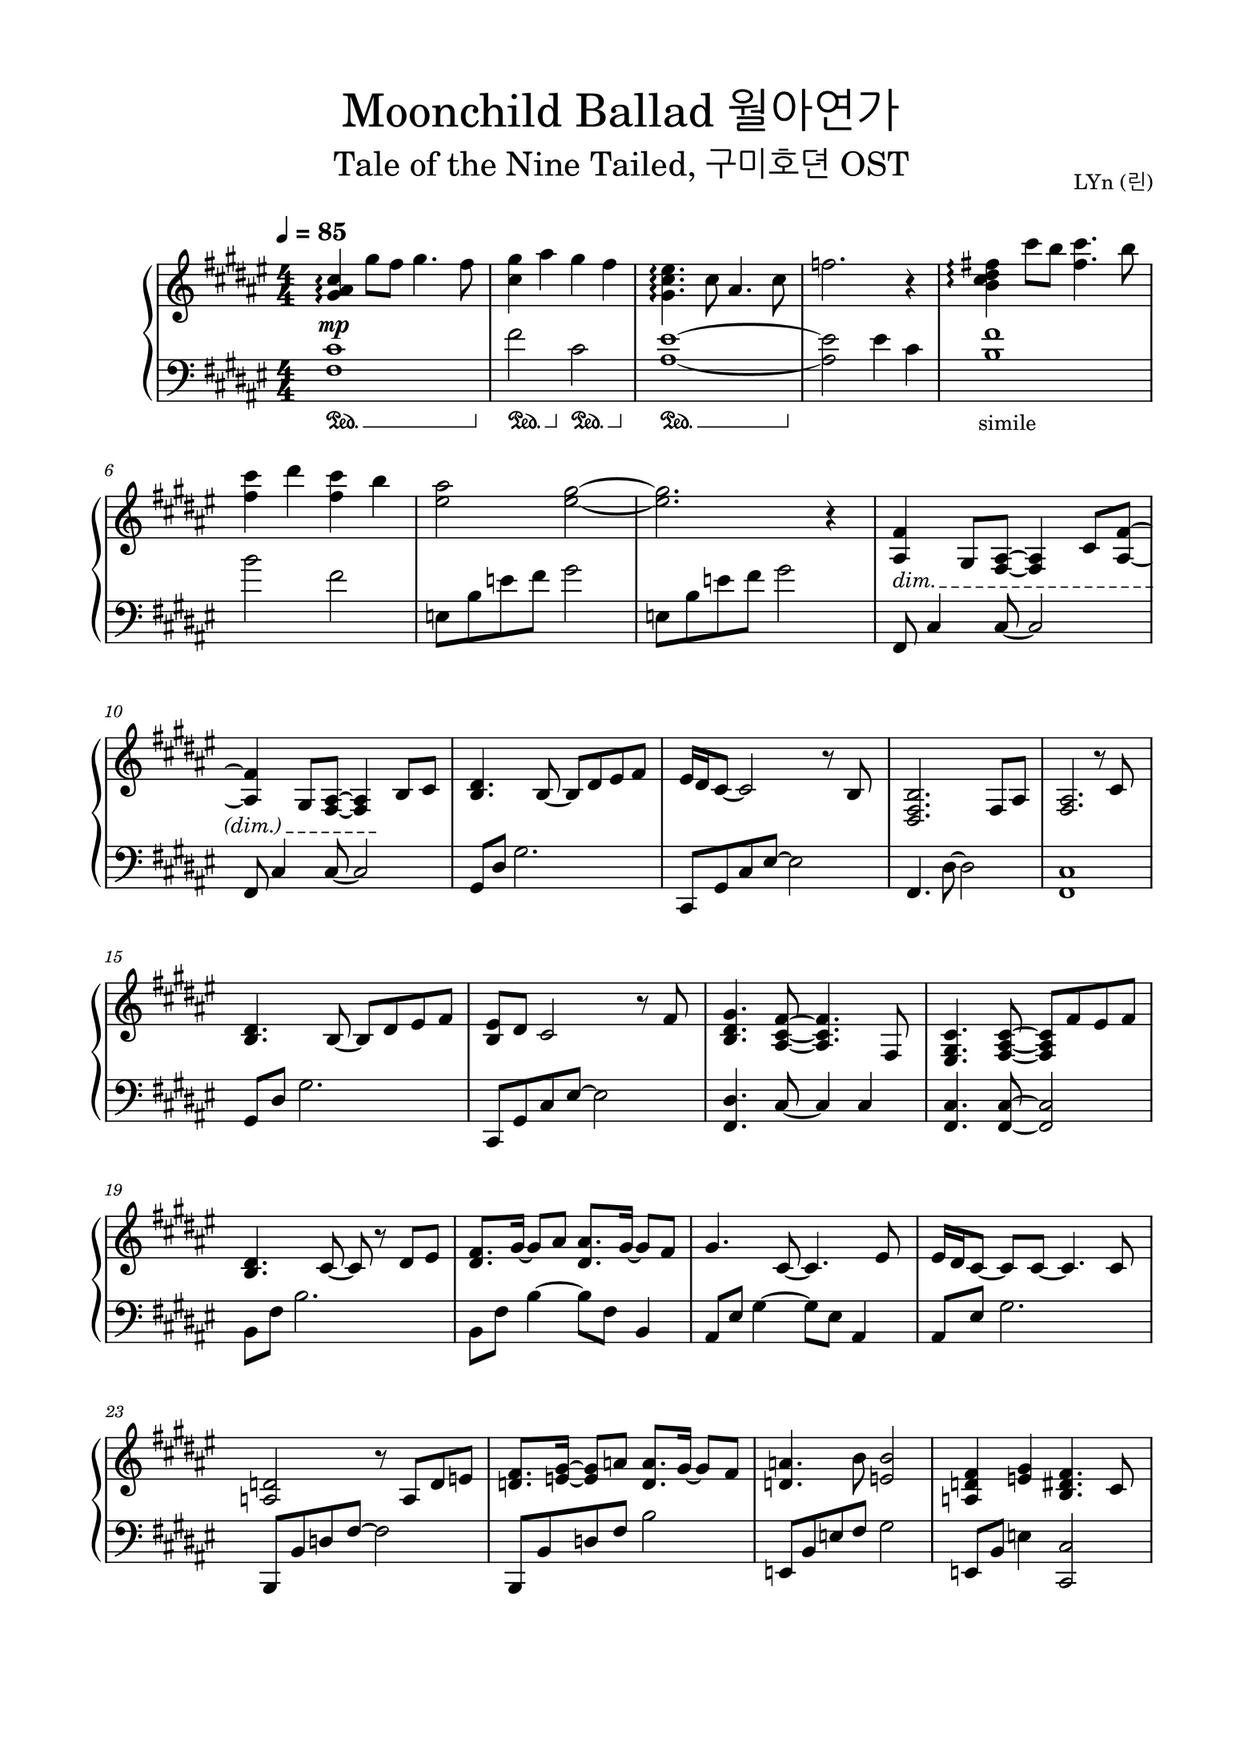 Moonchild Ballad Score